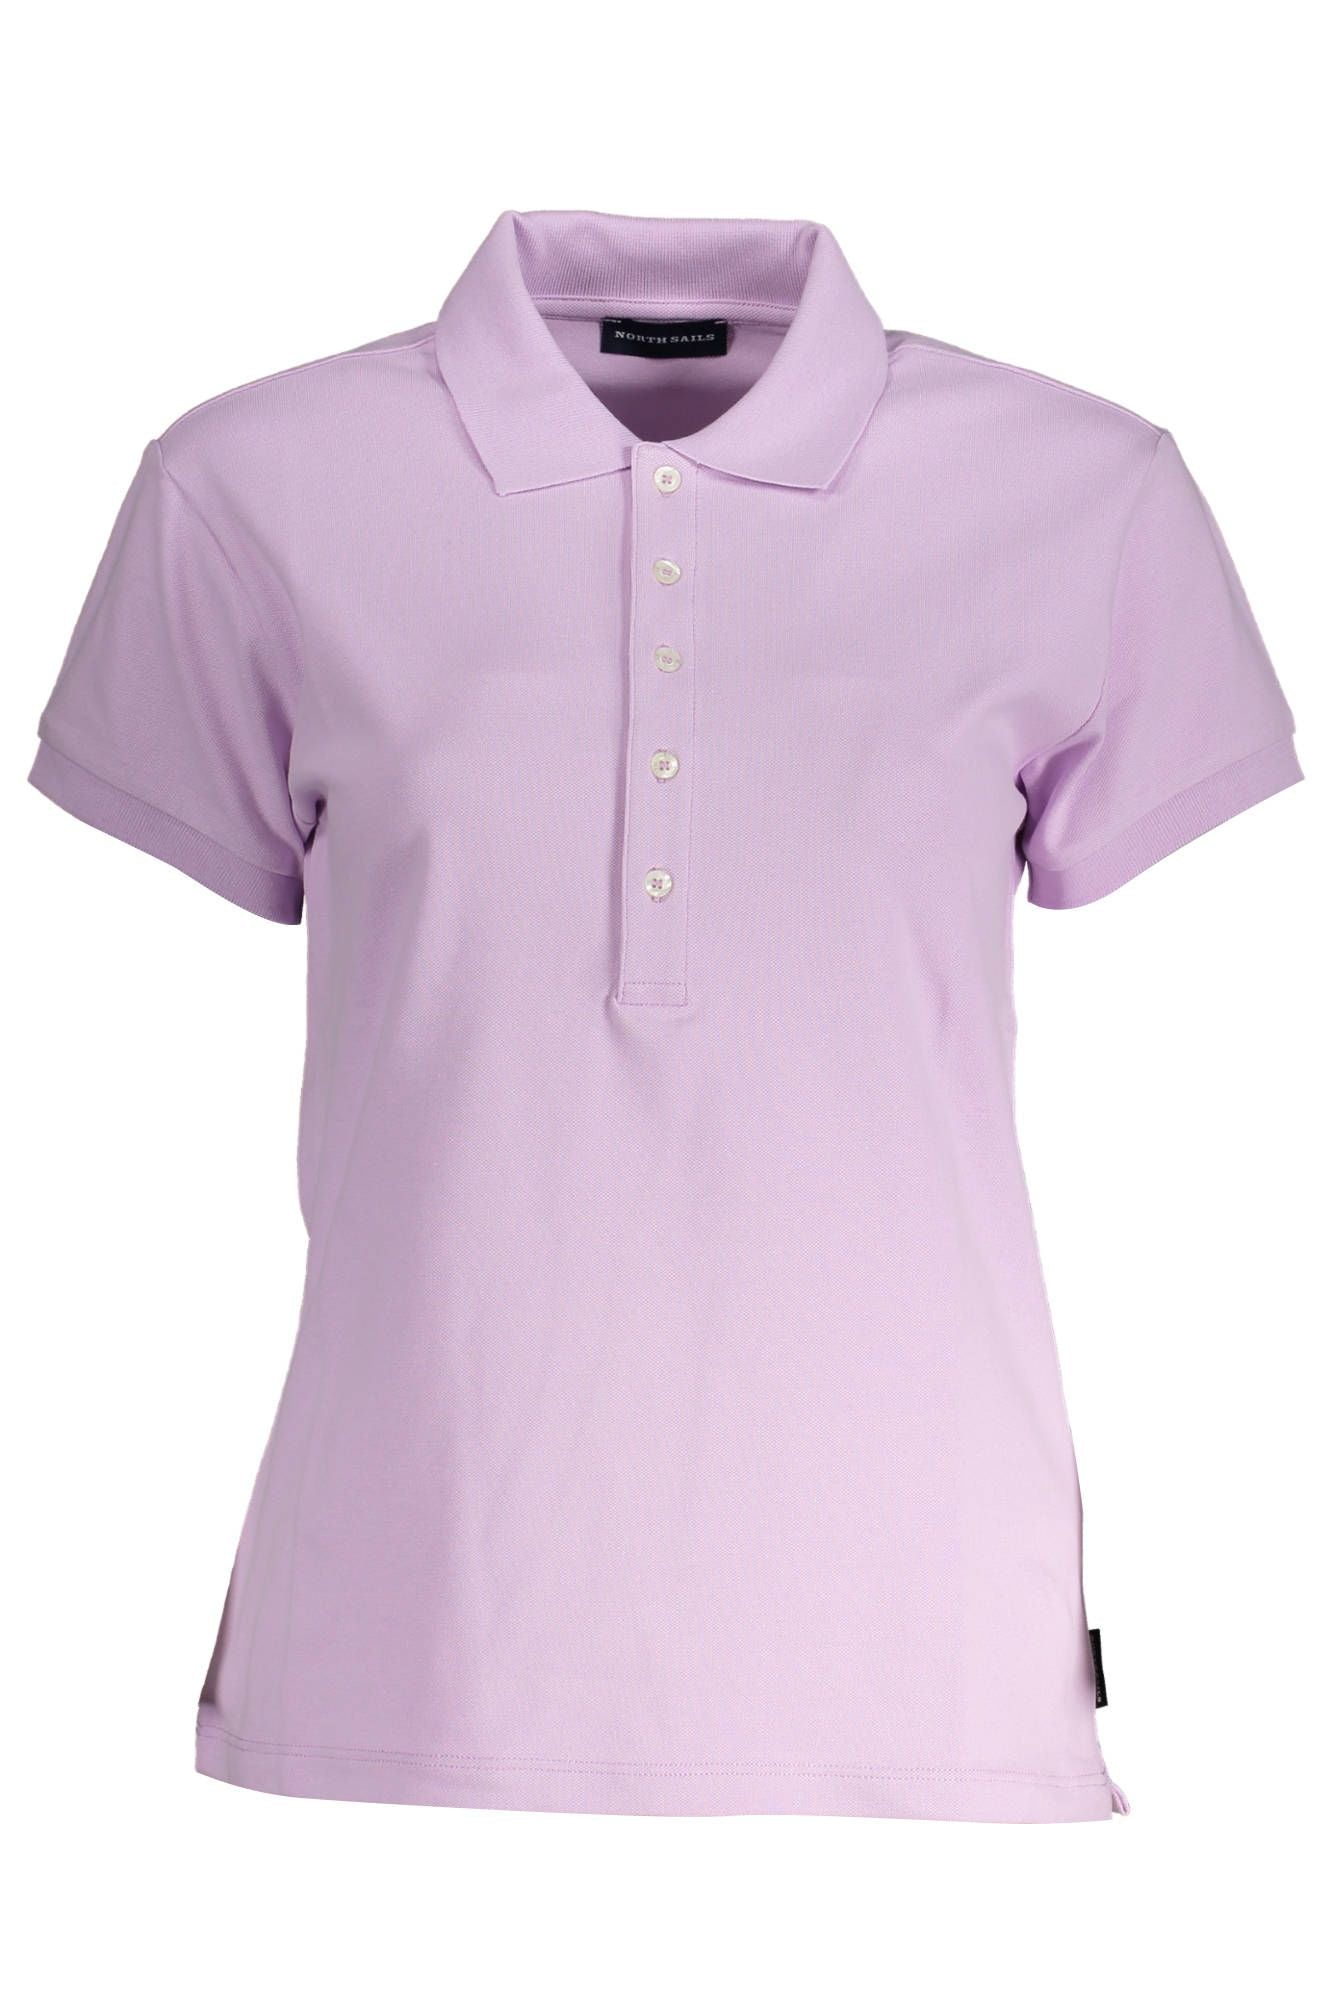 North Sails Pink Cotton Polo Shirt